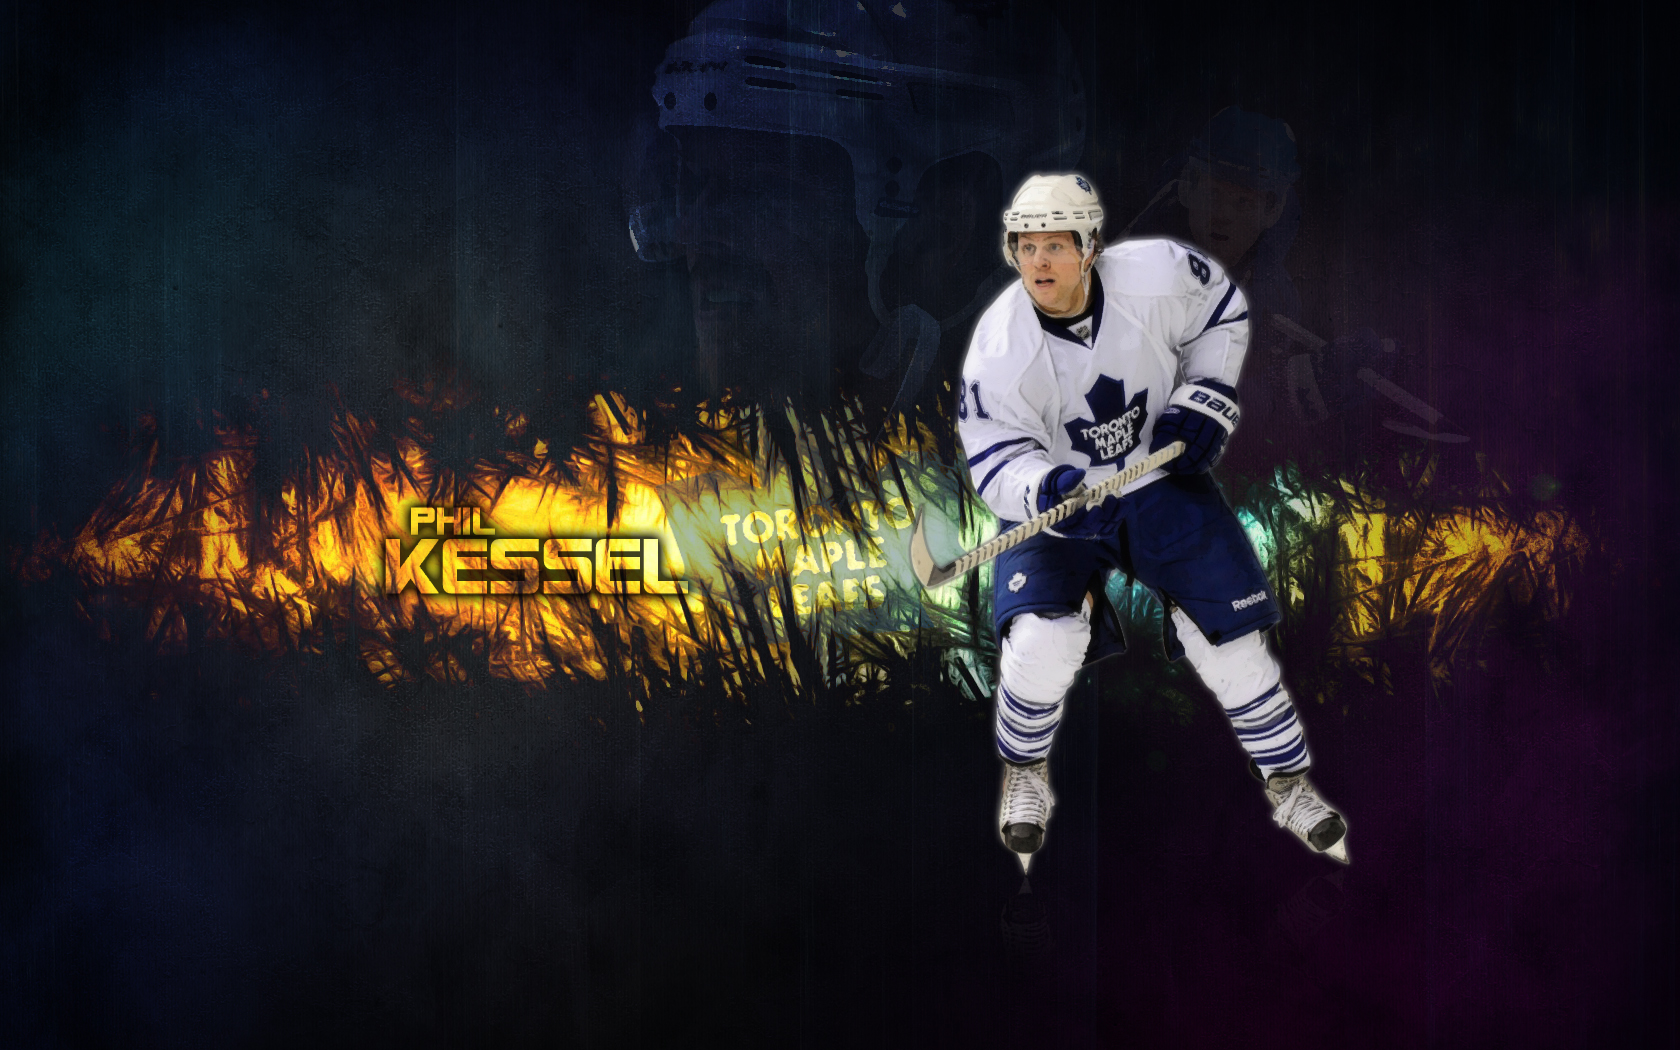 Desktop Wallpaper Featuring Toronto Maple Leafs Sniper Phil Kessel